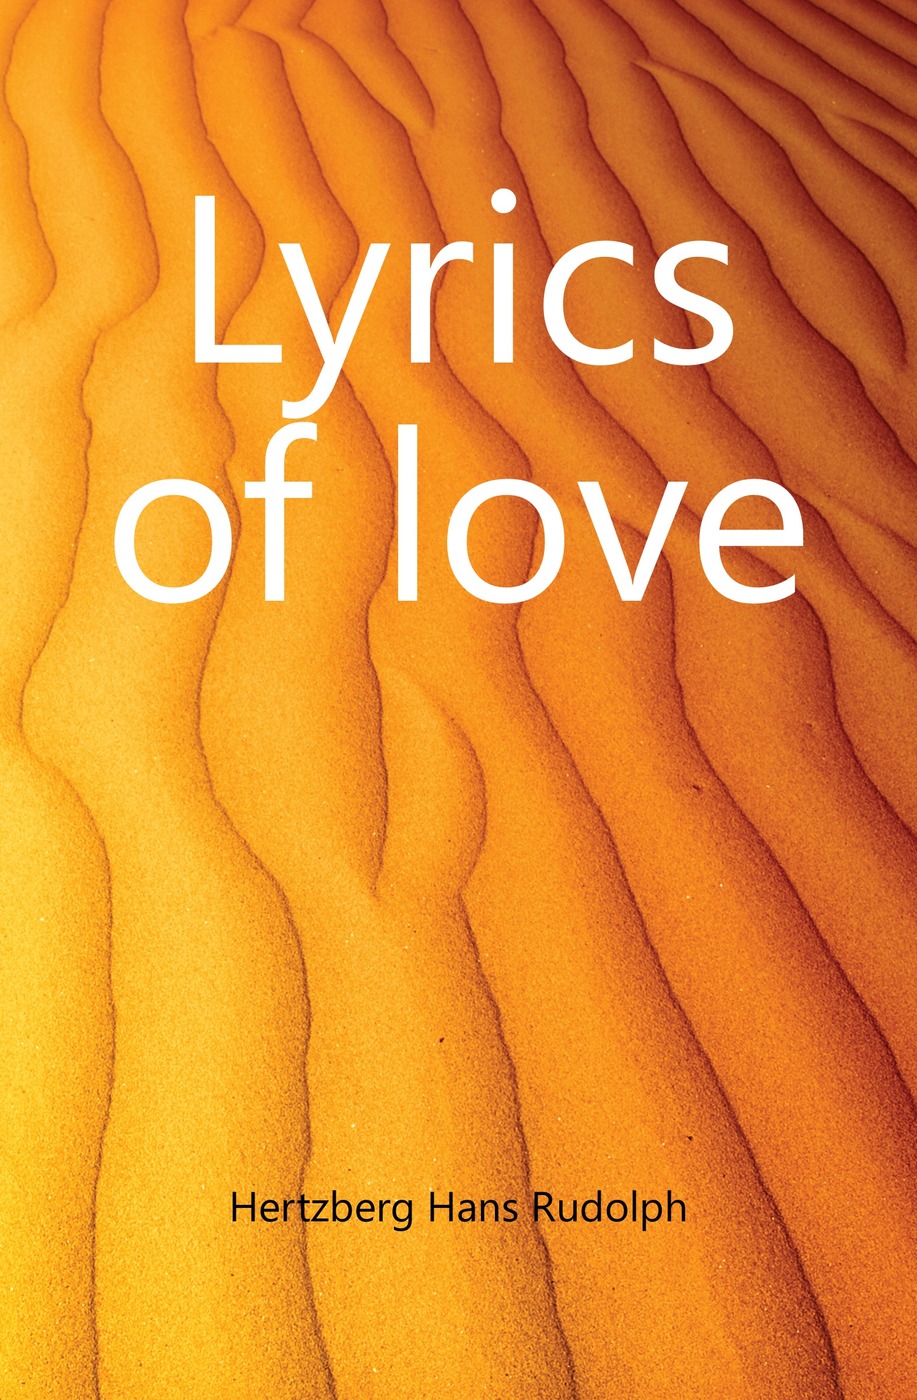 Lyrics of love